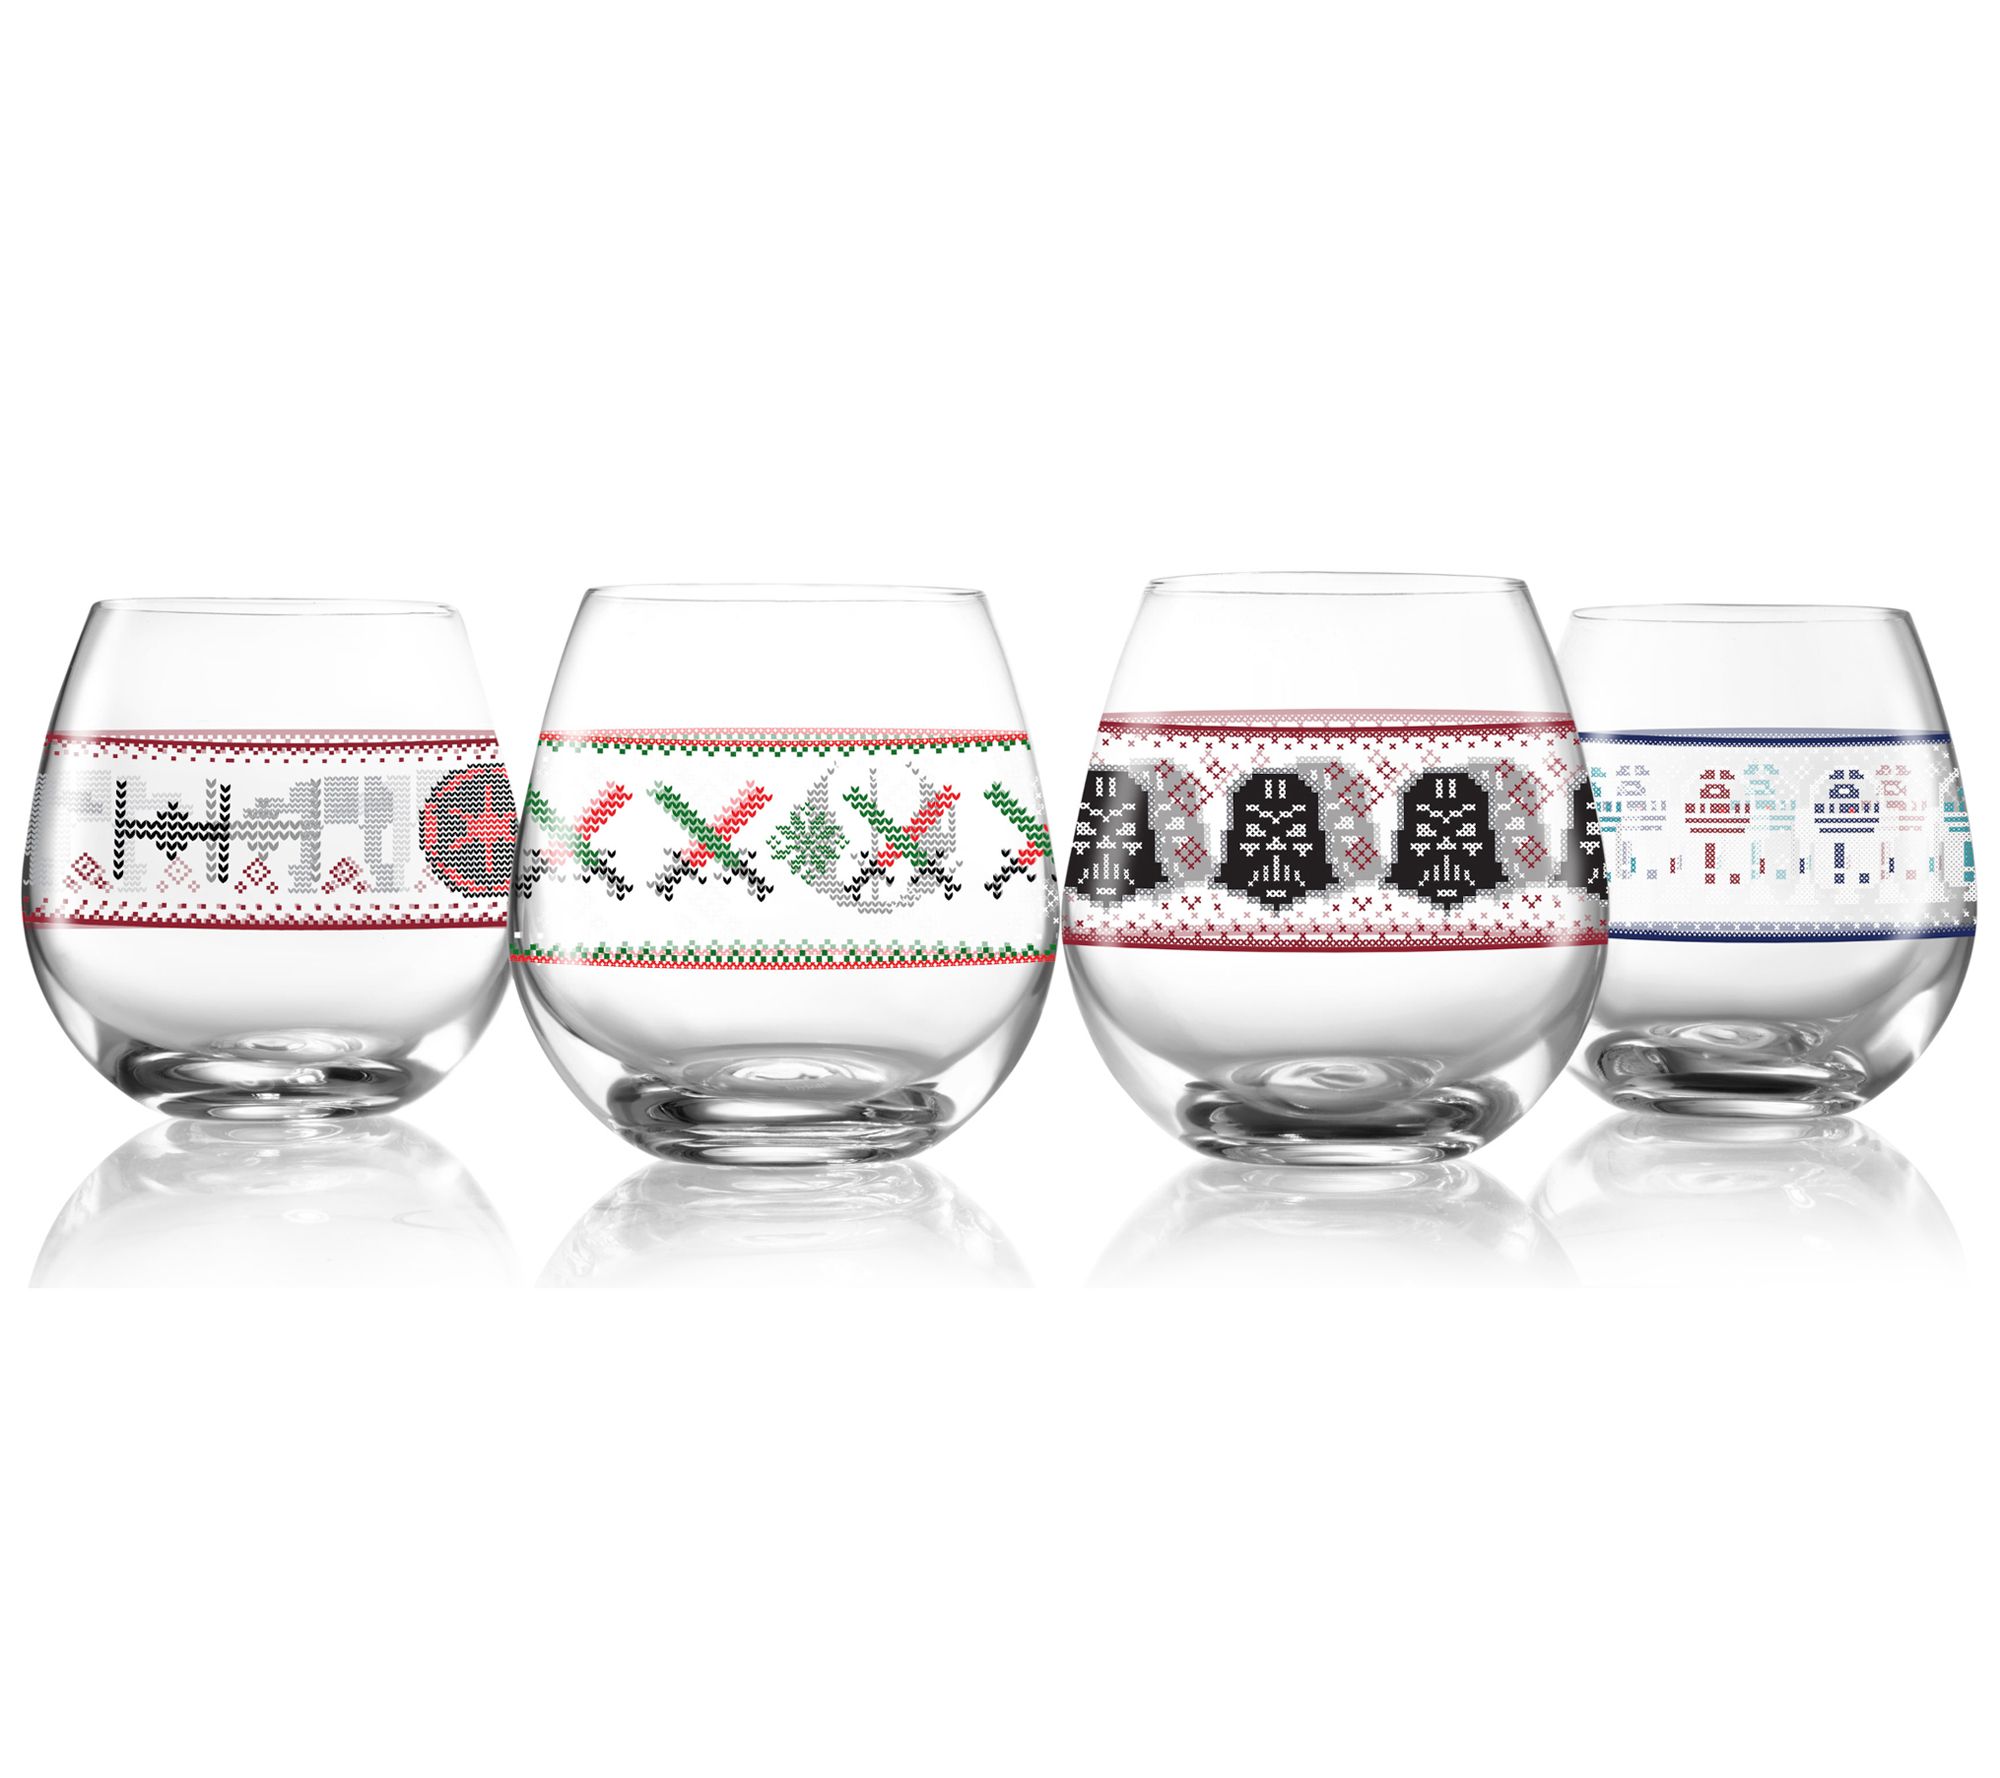 Star Wars Inspired I Love You I Know Stemless Wine Glass Set